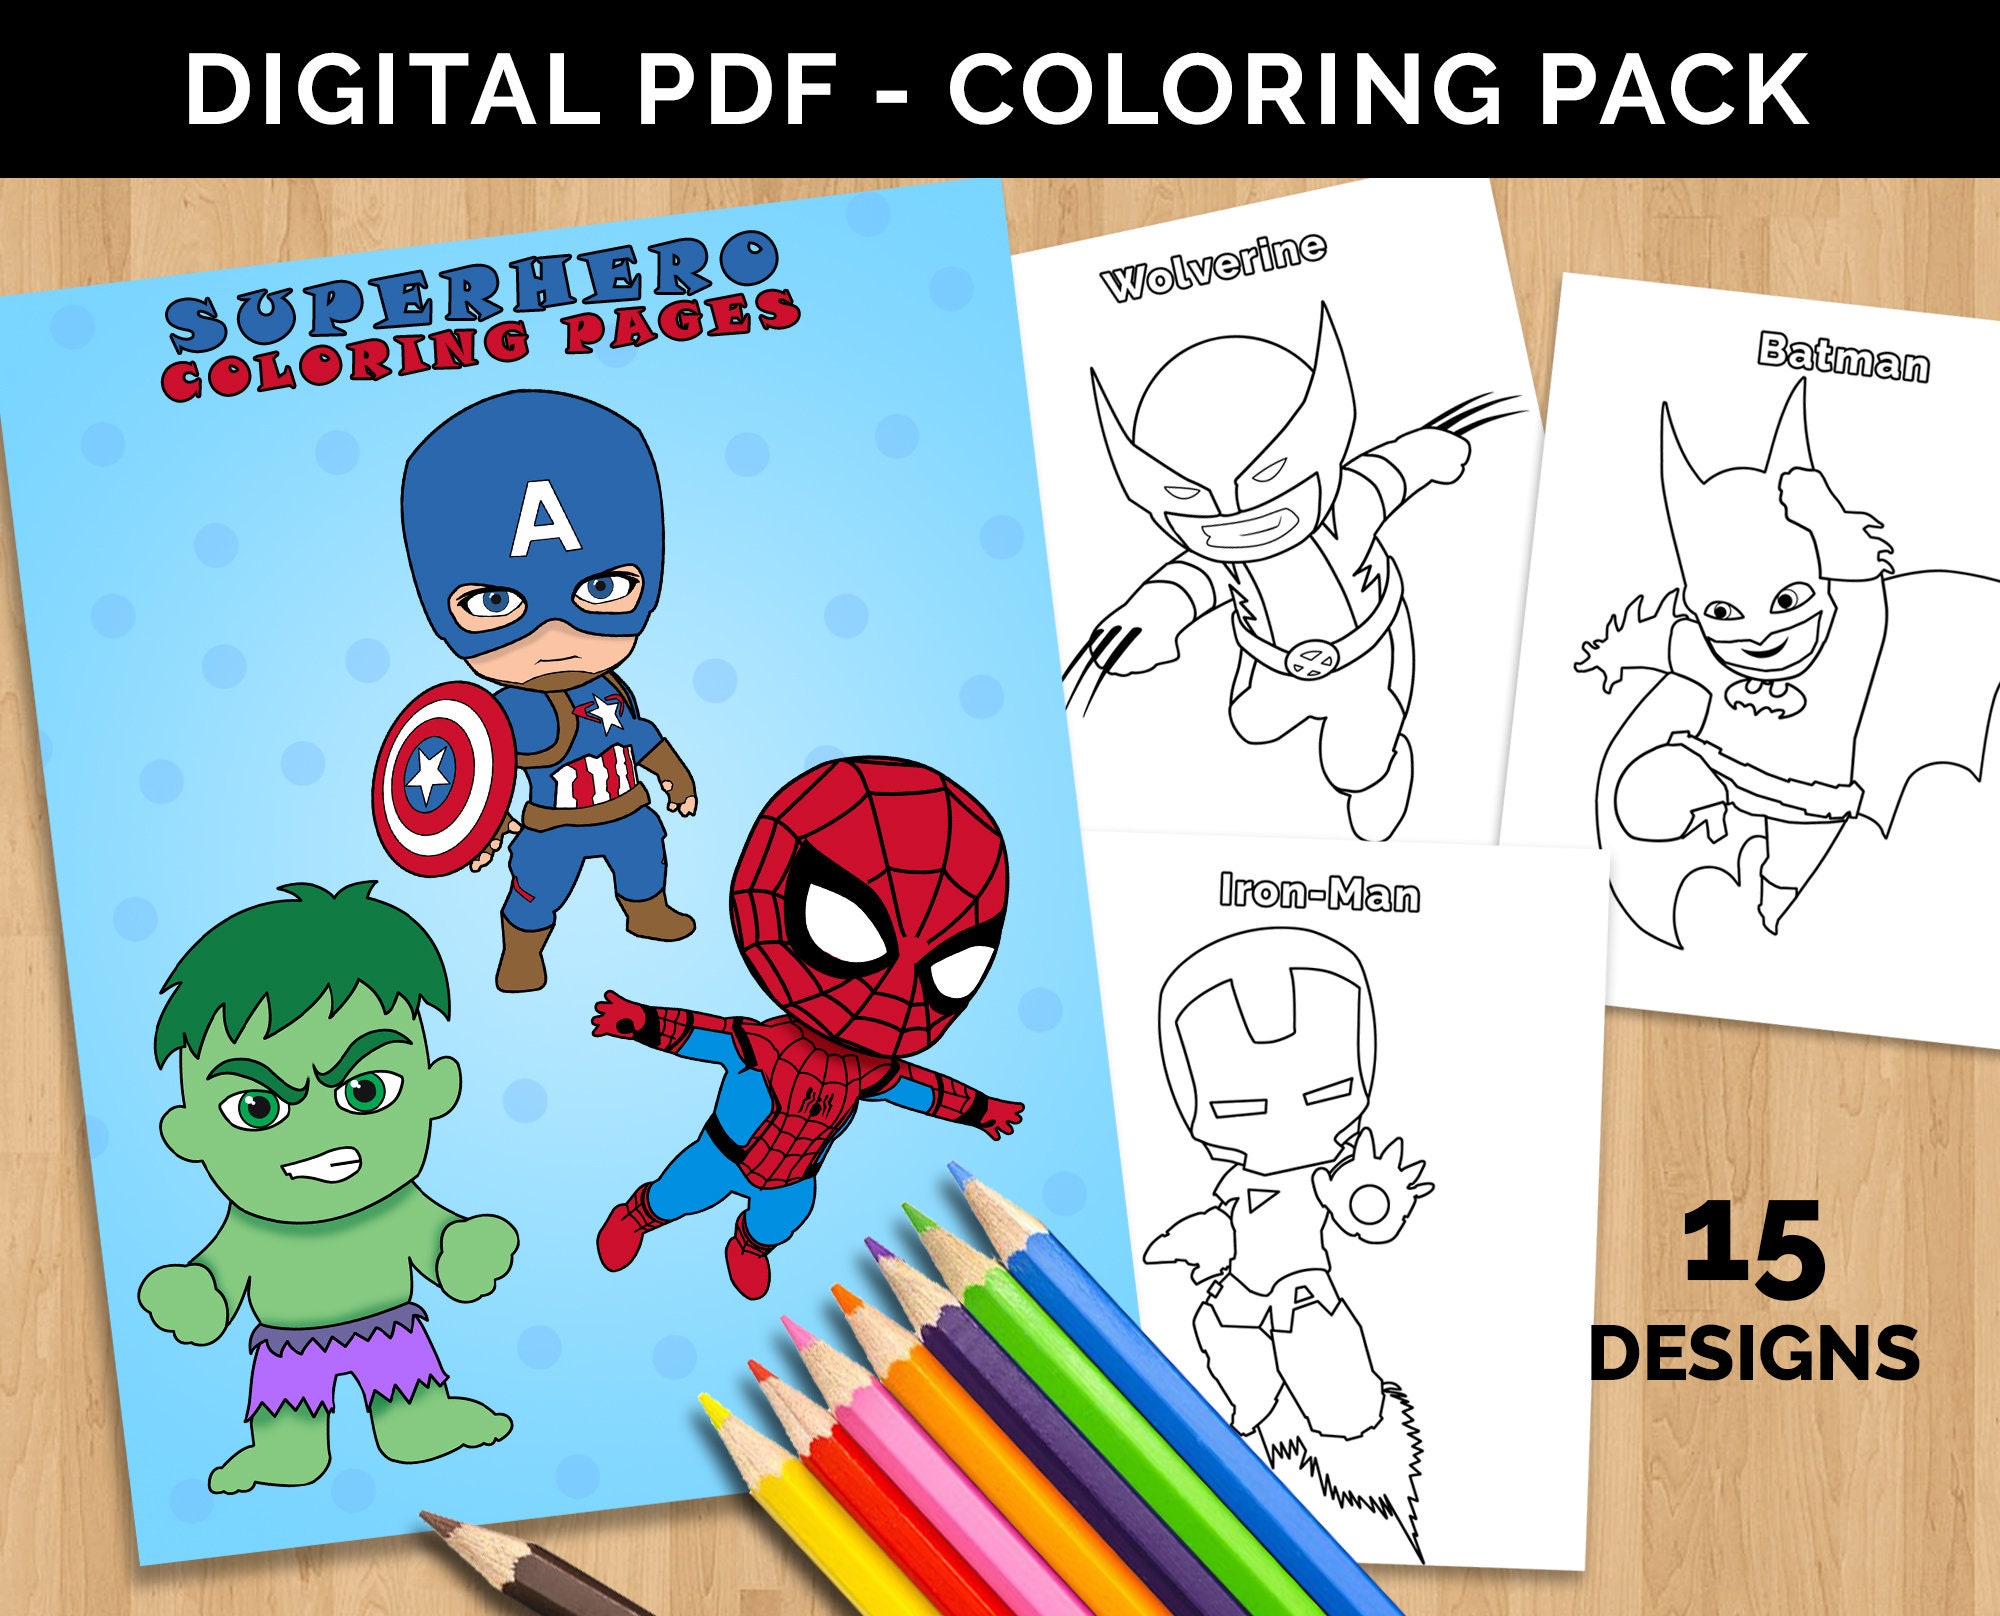 Superhero coloring pages kids super hero coloring book cute printable superhero art digital coloring book party and birthday activities